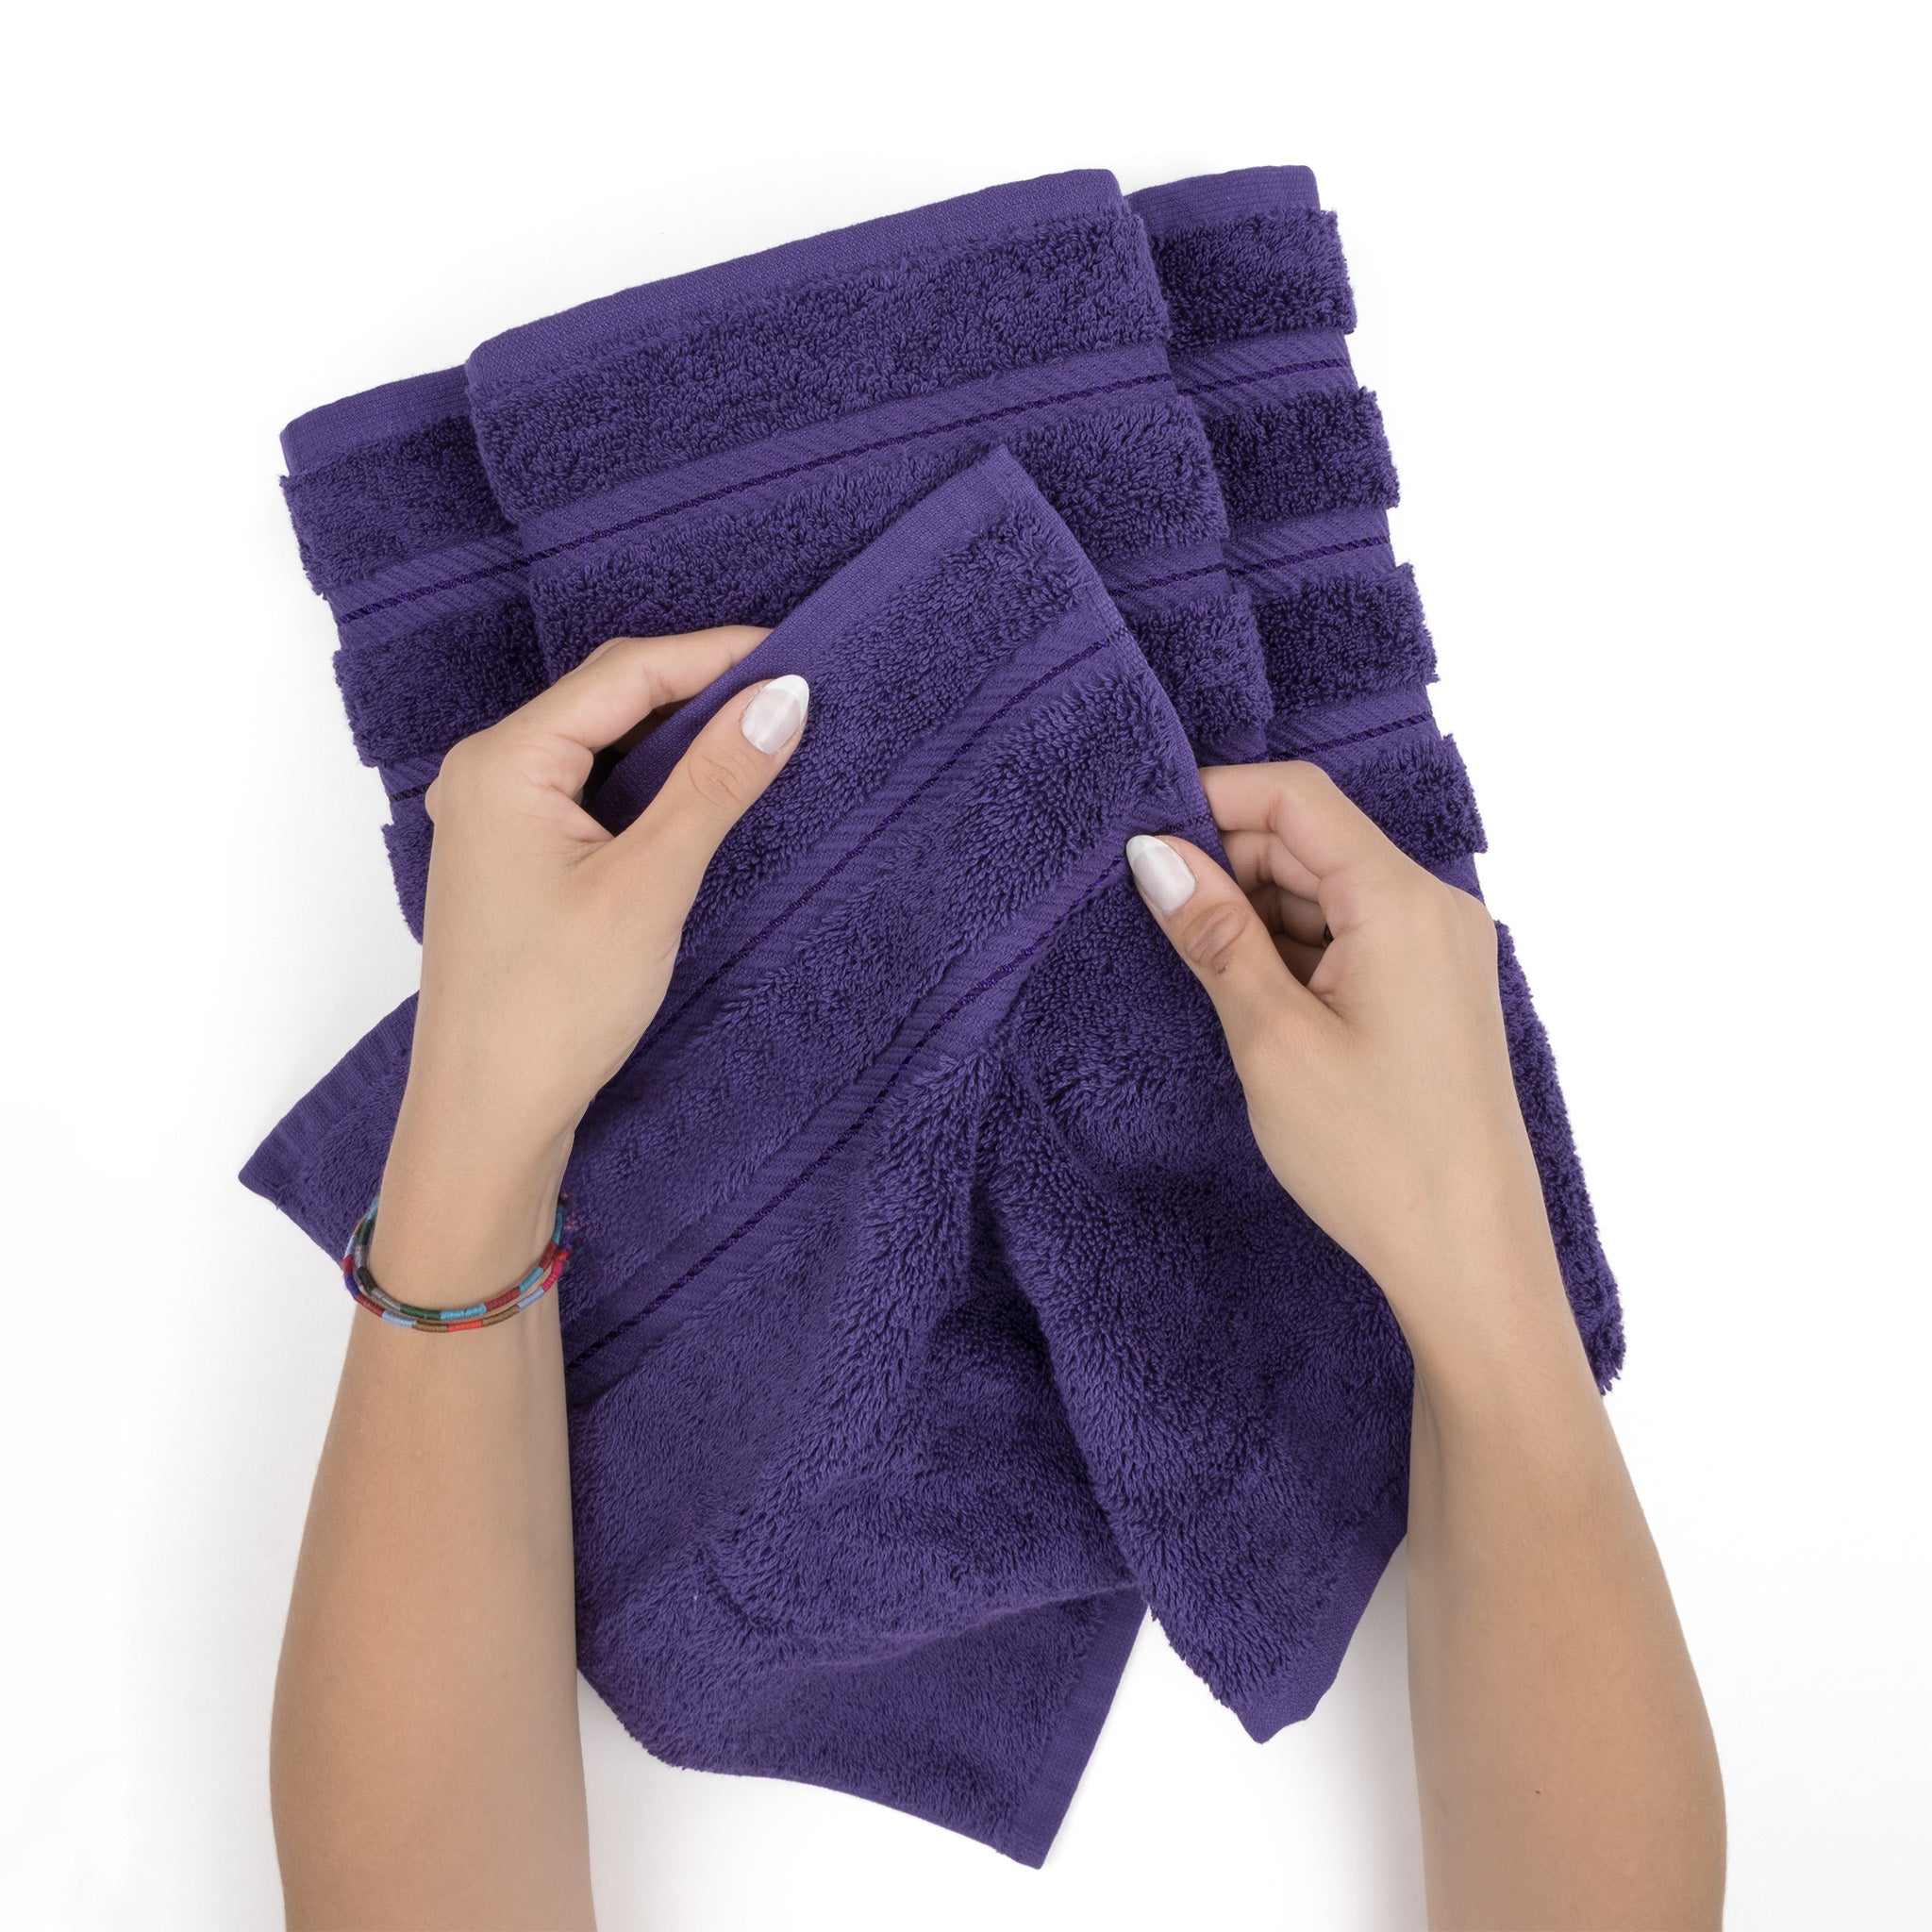  American Soft Linen 100% Turkish Cotton 4 Pack Hand Towel Set  purple-5